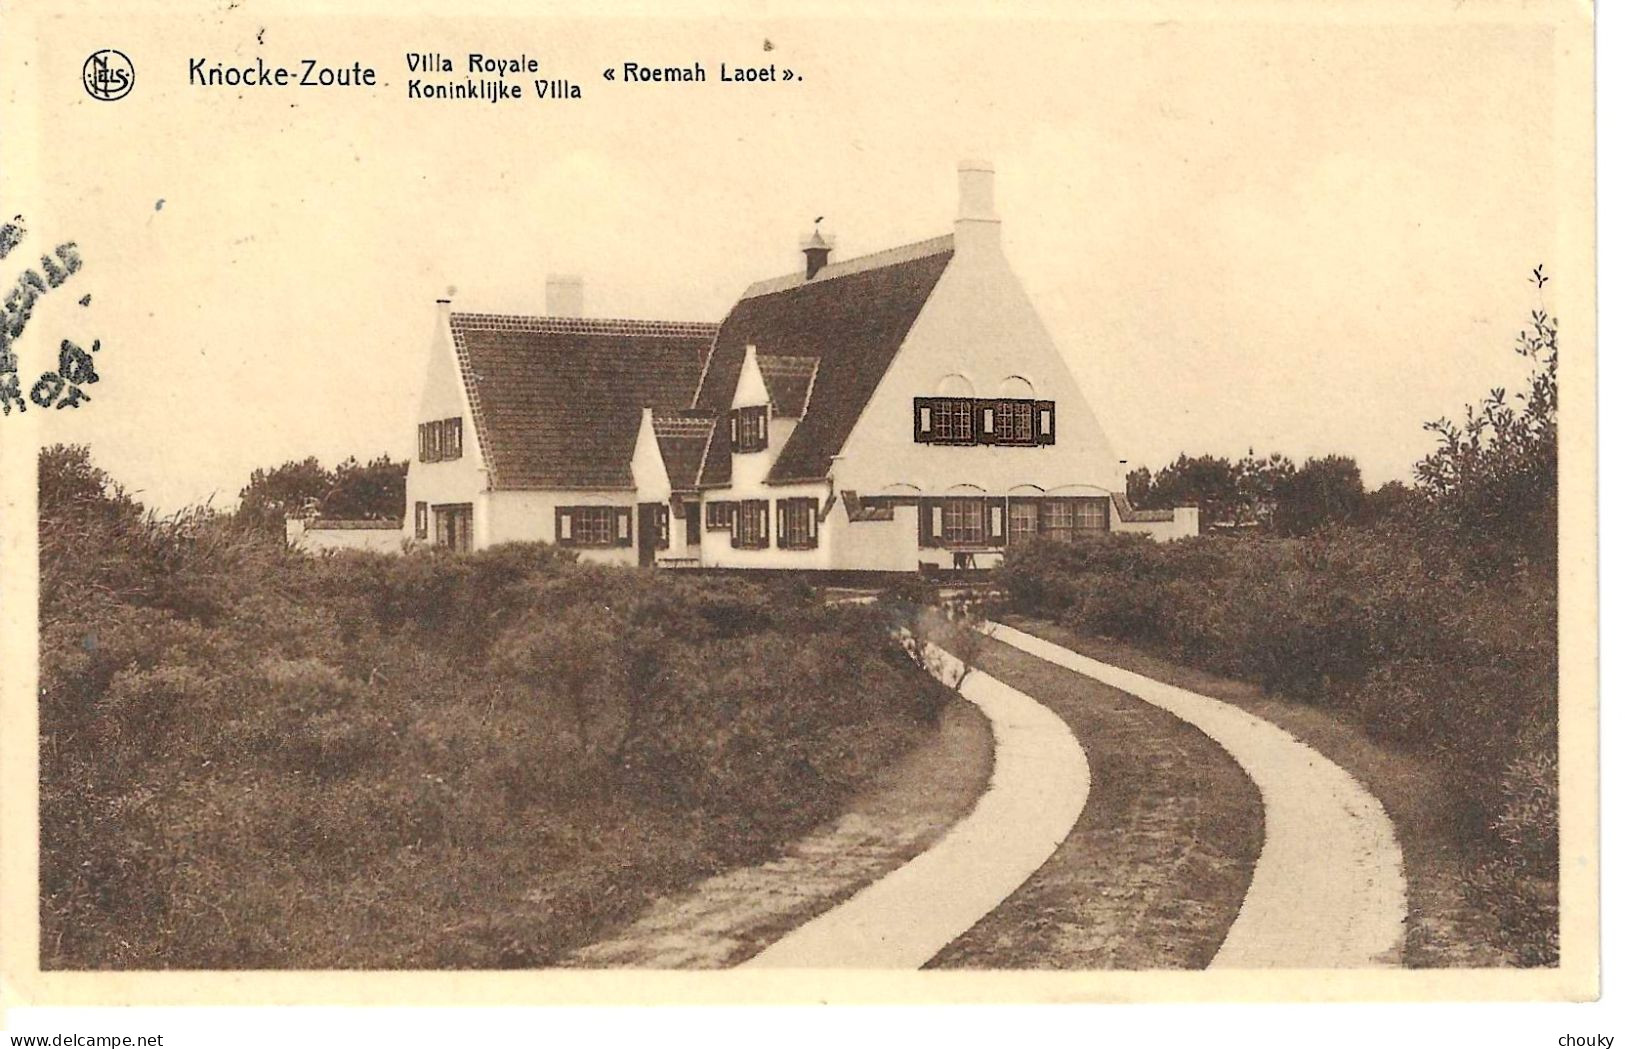 Knocke-Zoute (1936) - Knokke